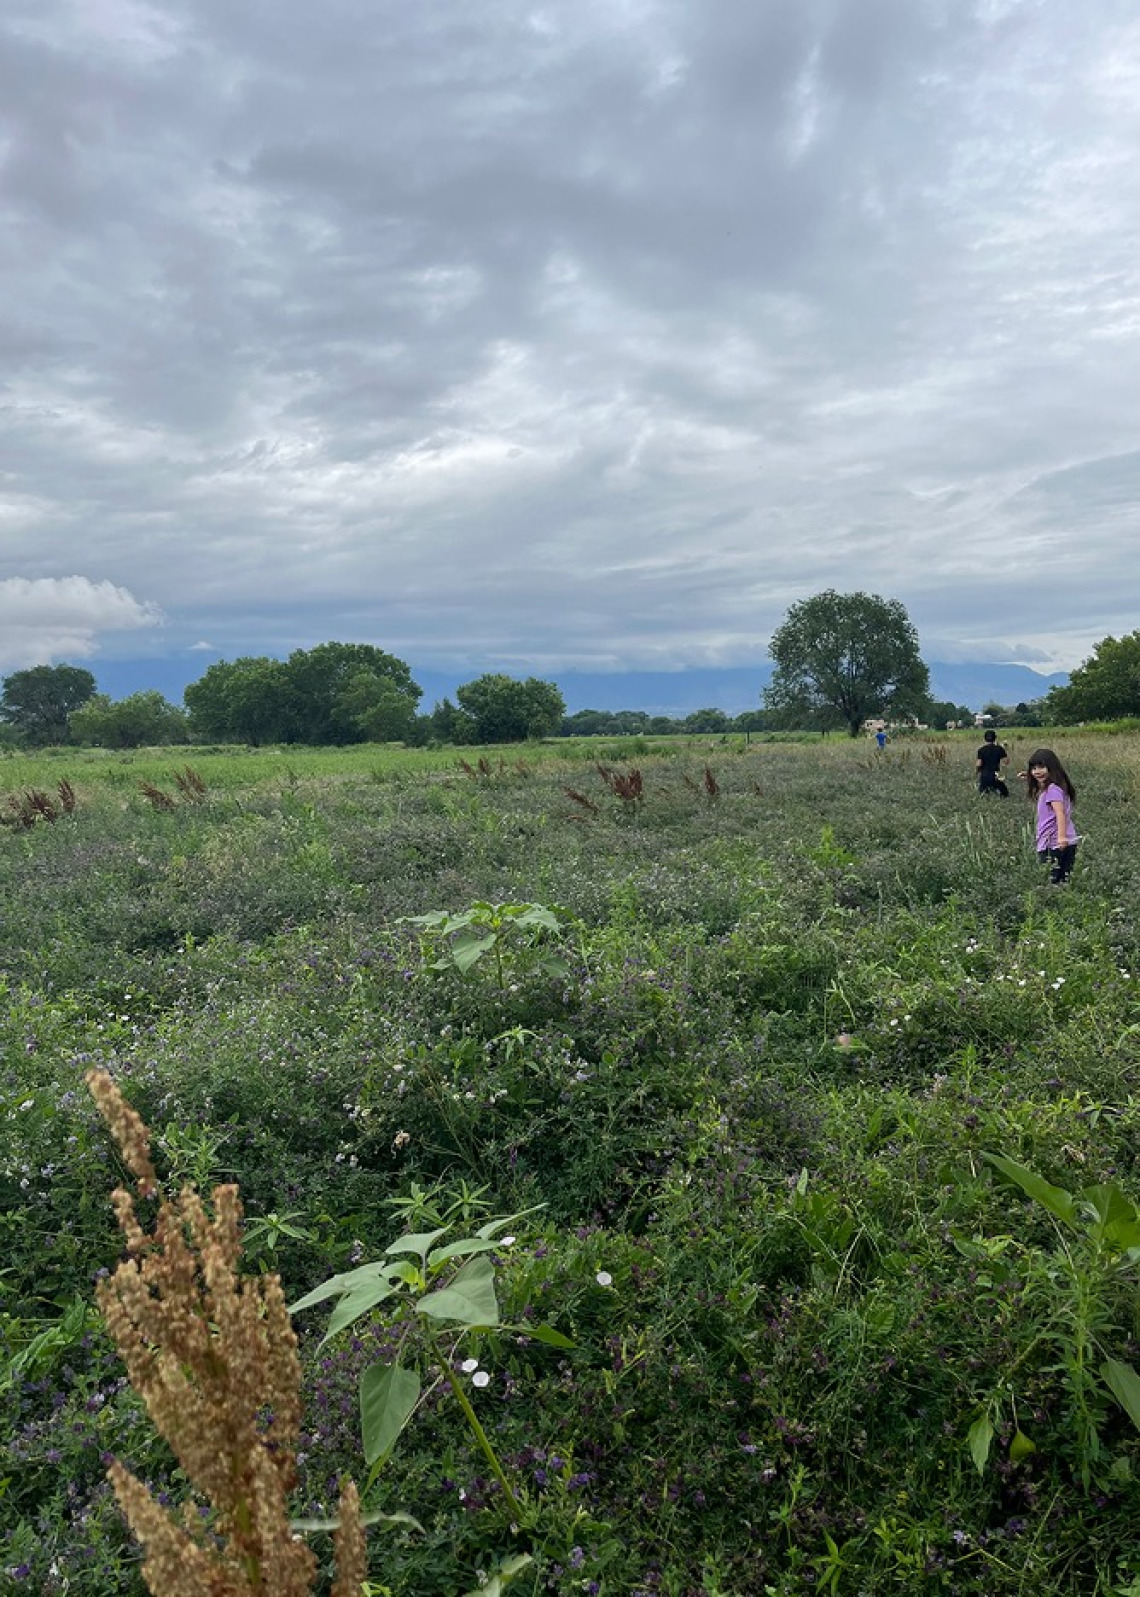 Children explore an alfalfa field on a New Mexico farm.